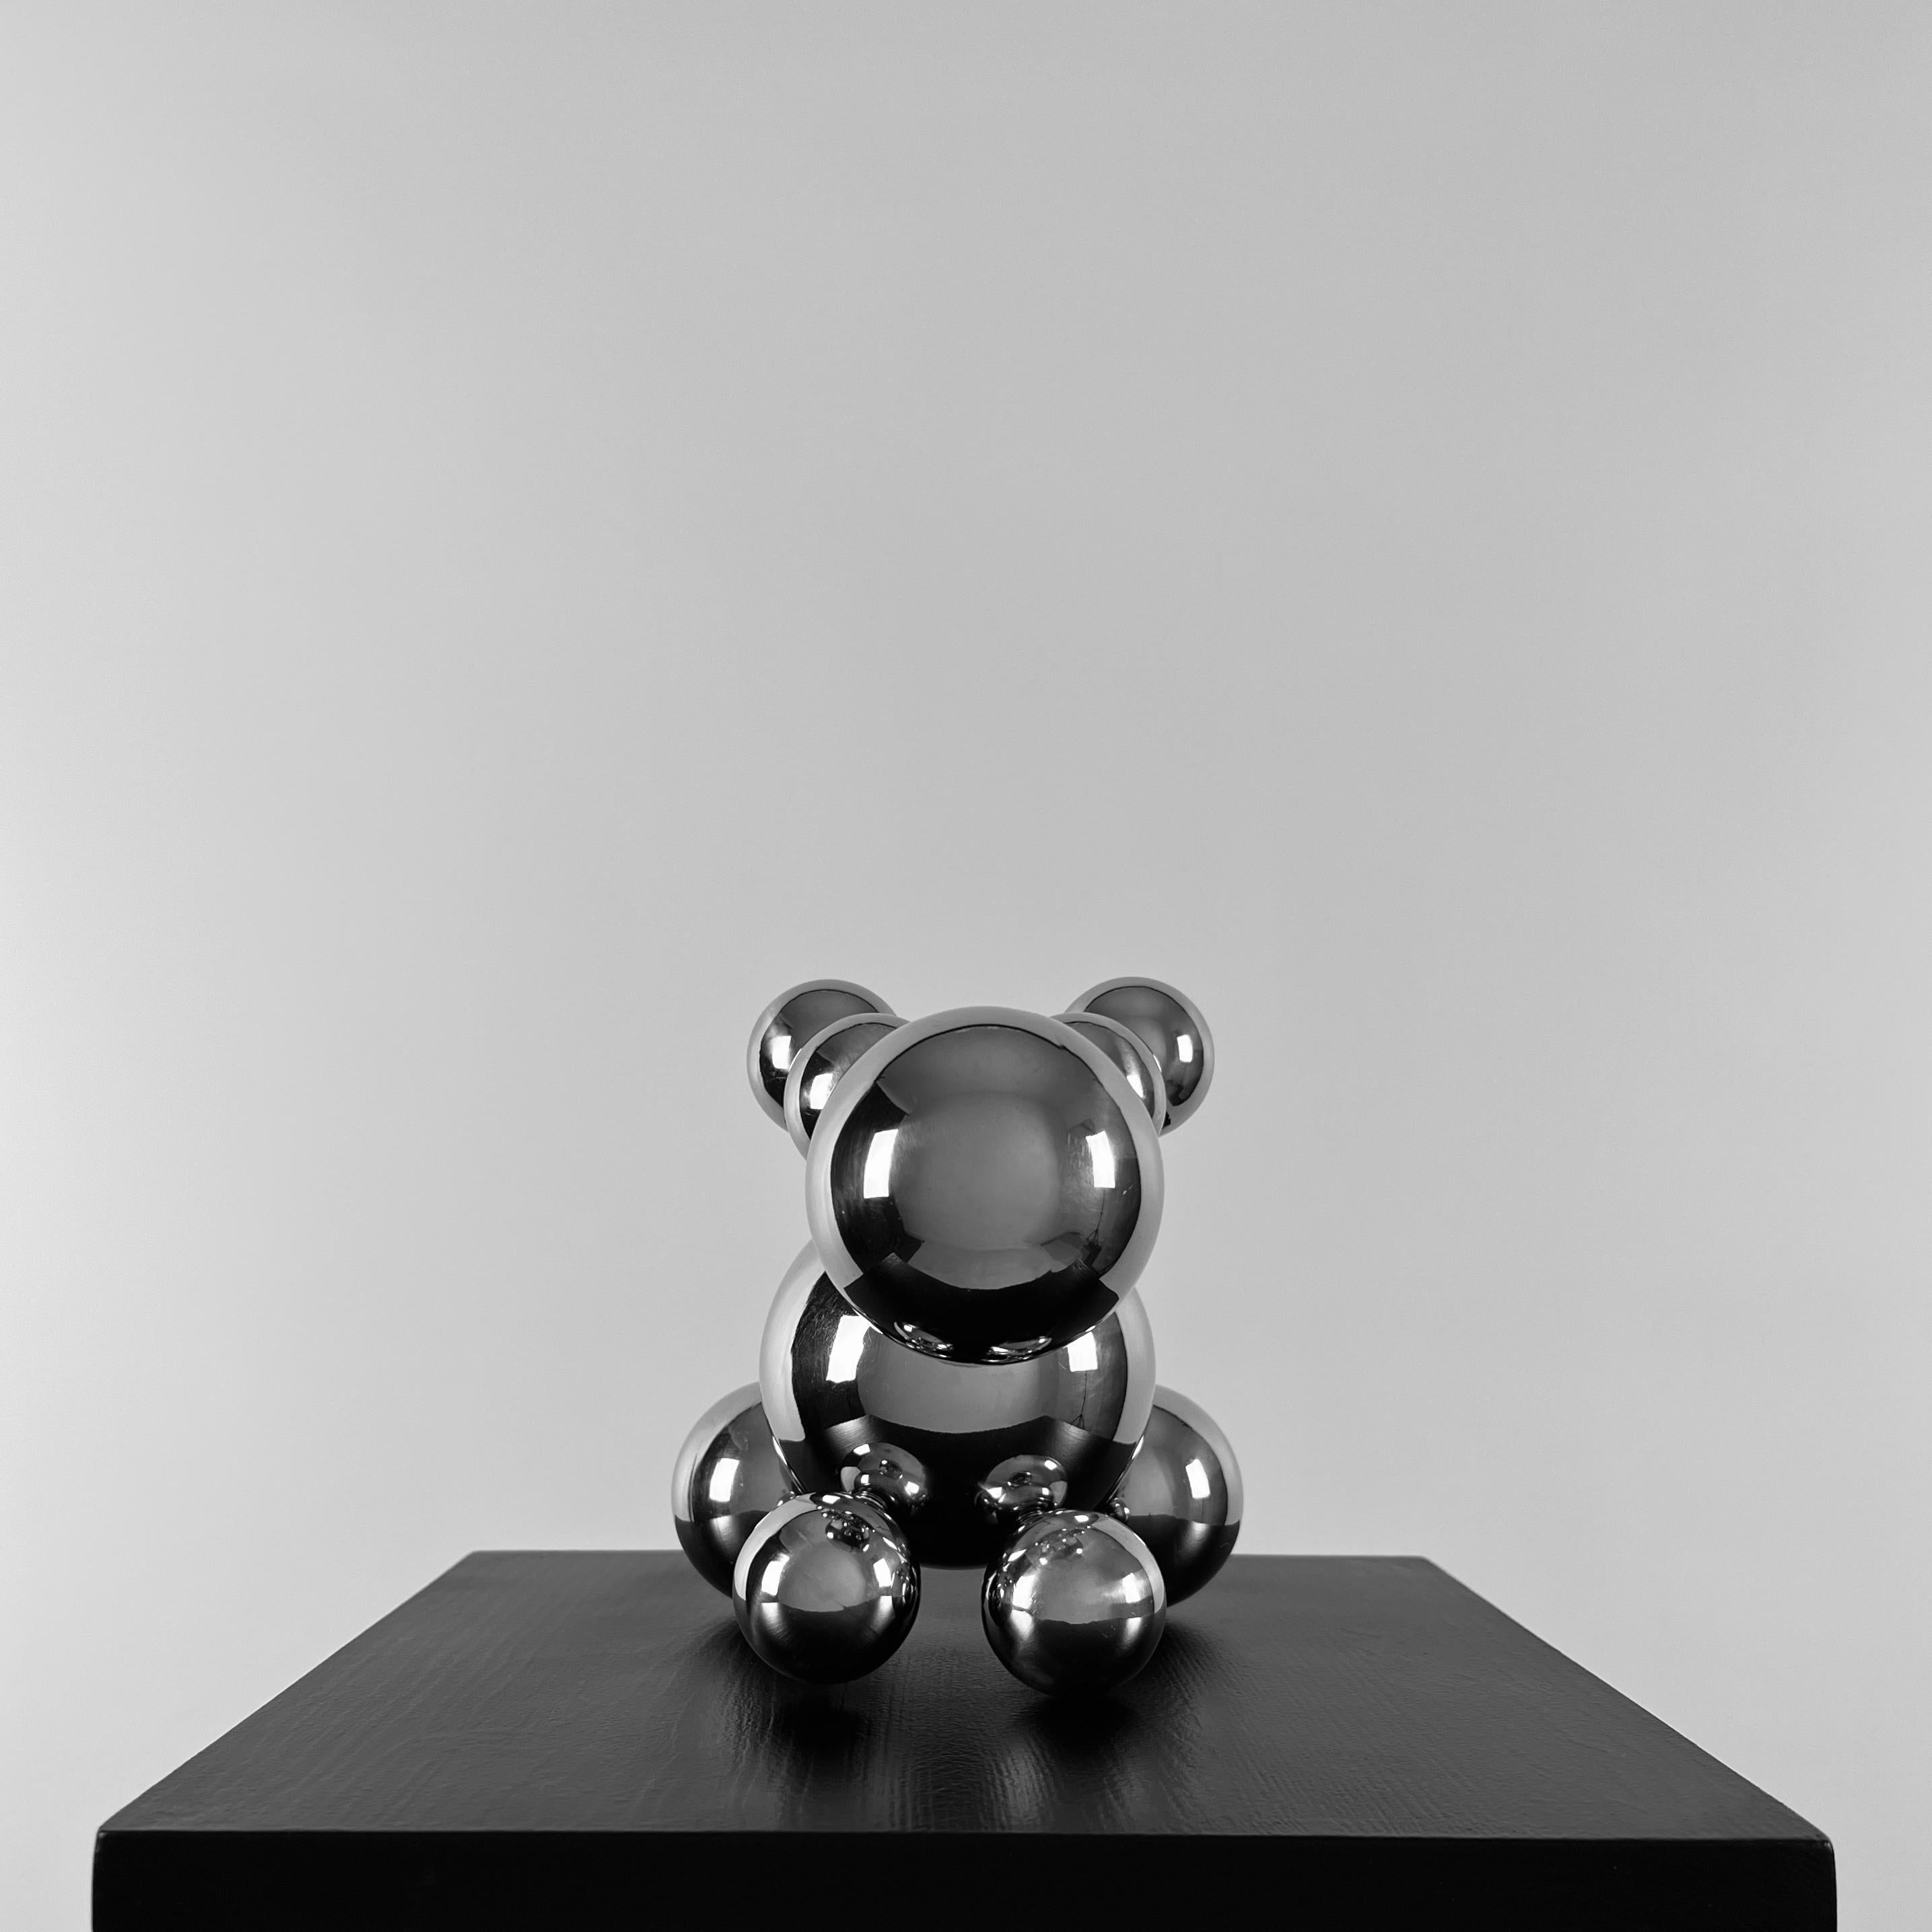 Stainless Steel Rabbit Robot Minimalistic Robot Sculpture 6